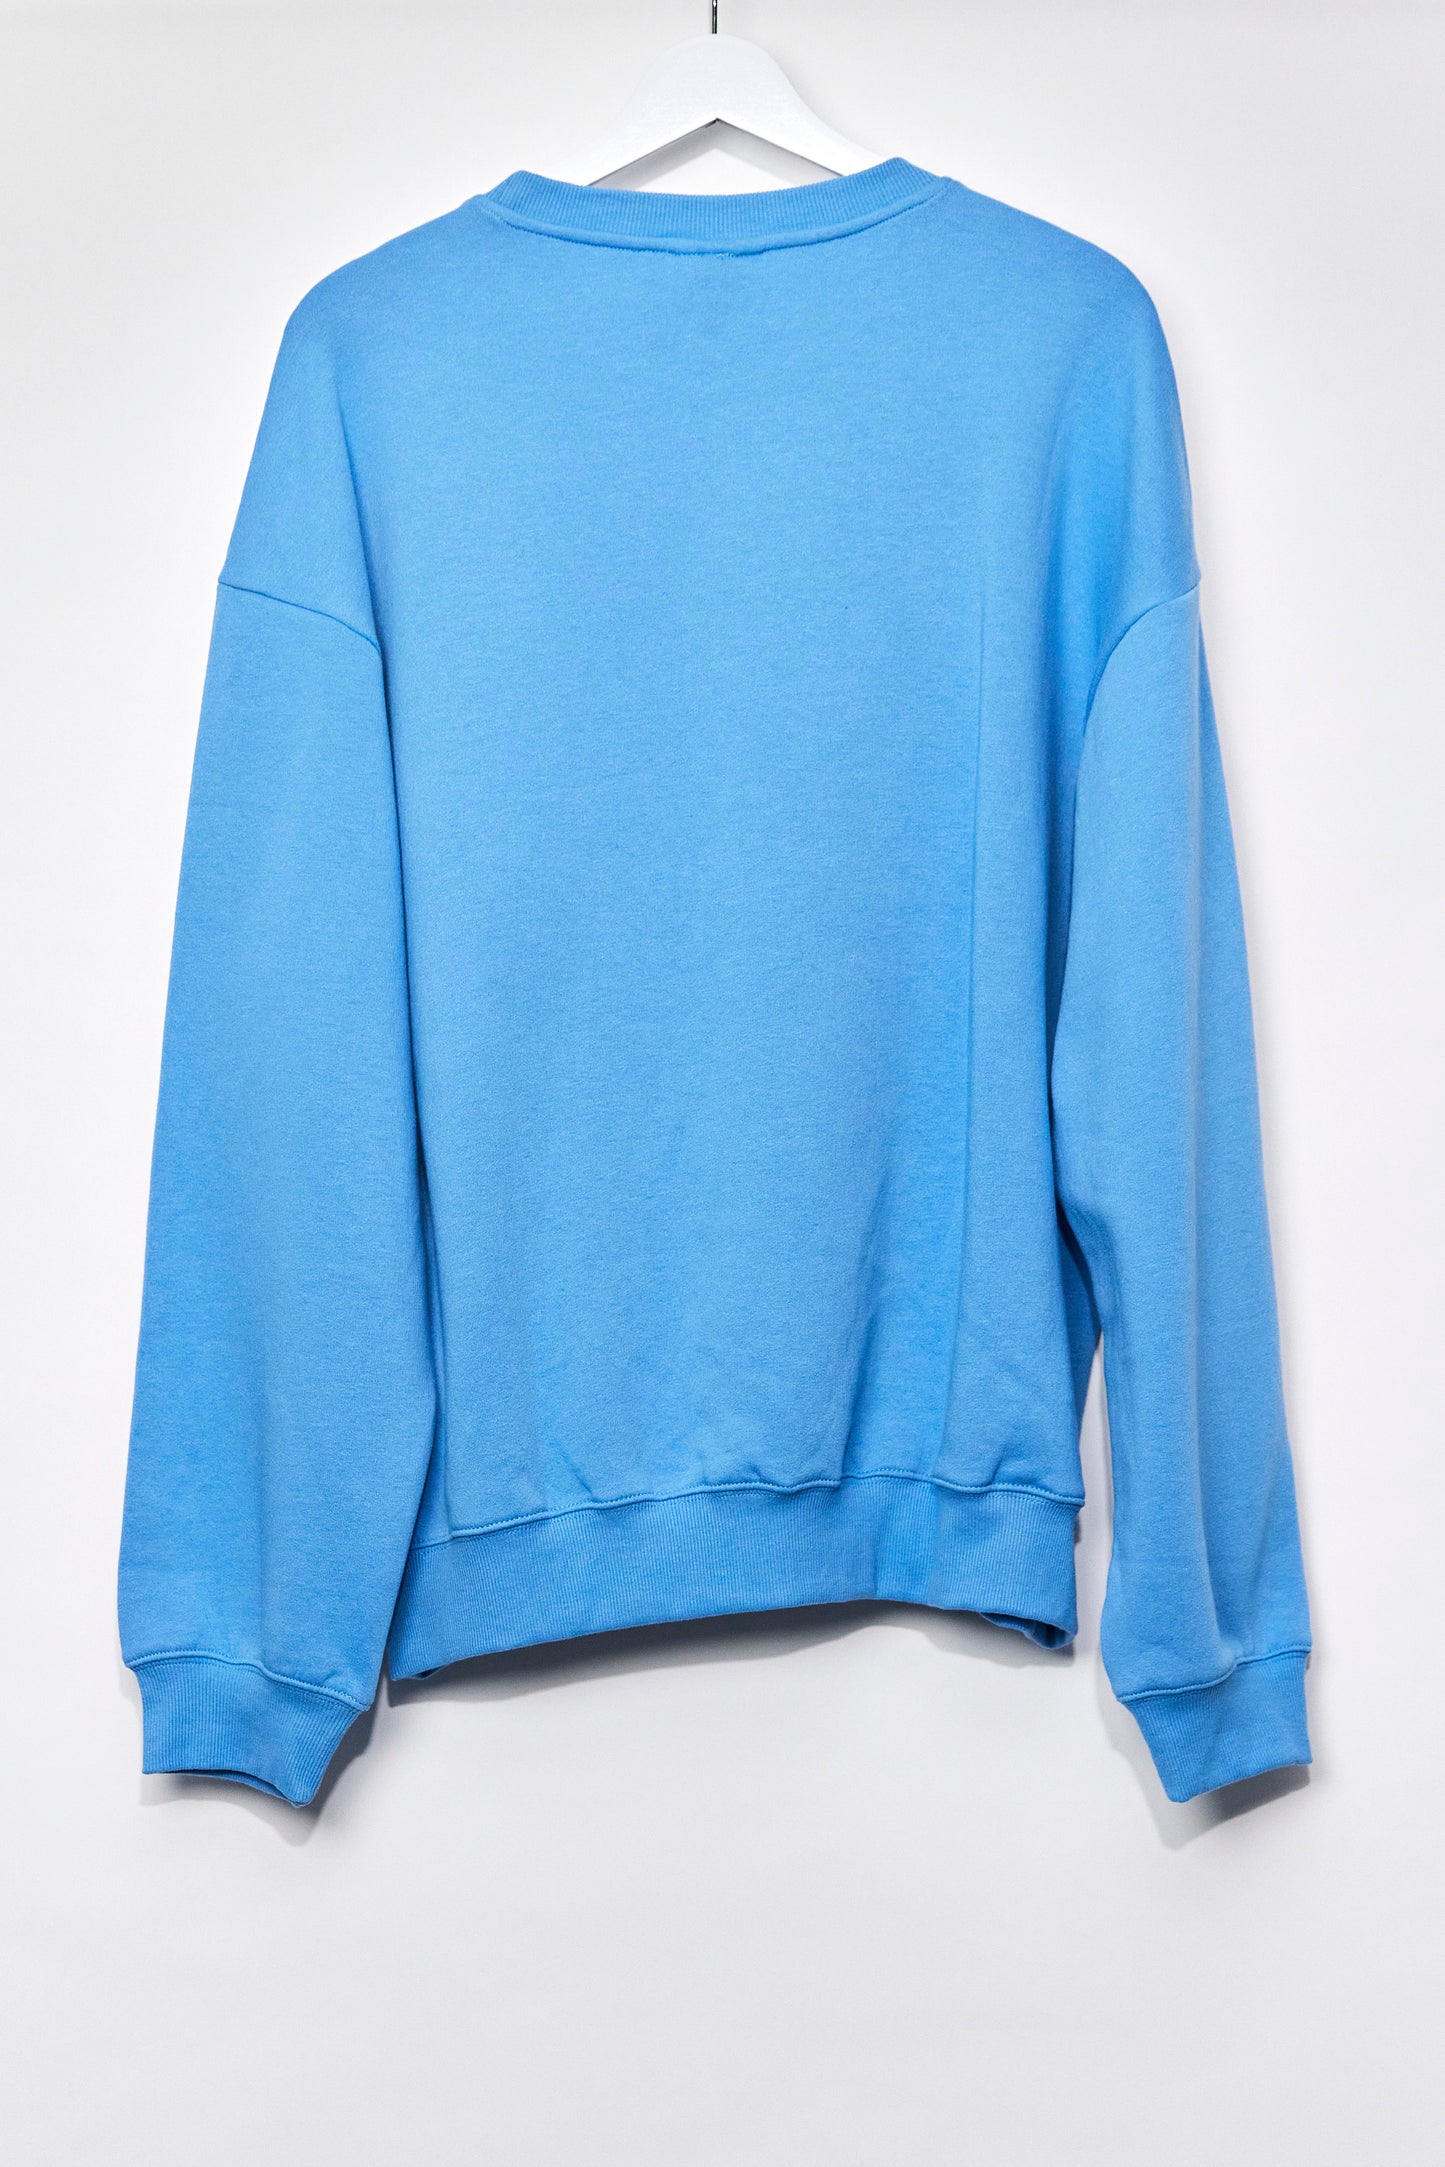 Mens H&M Blue Sweatshirt size Large